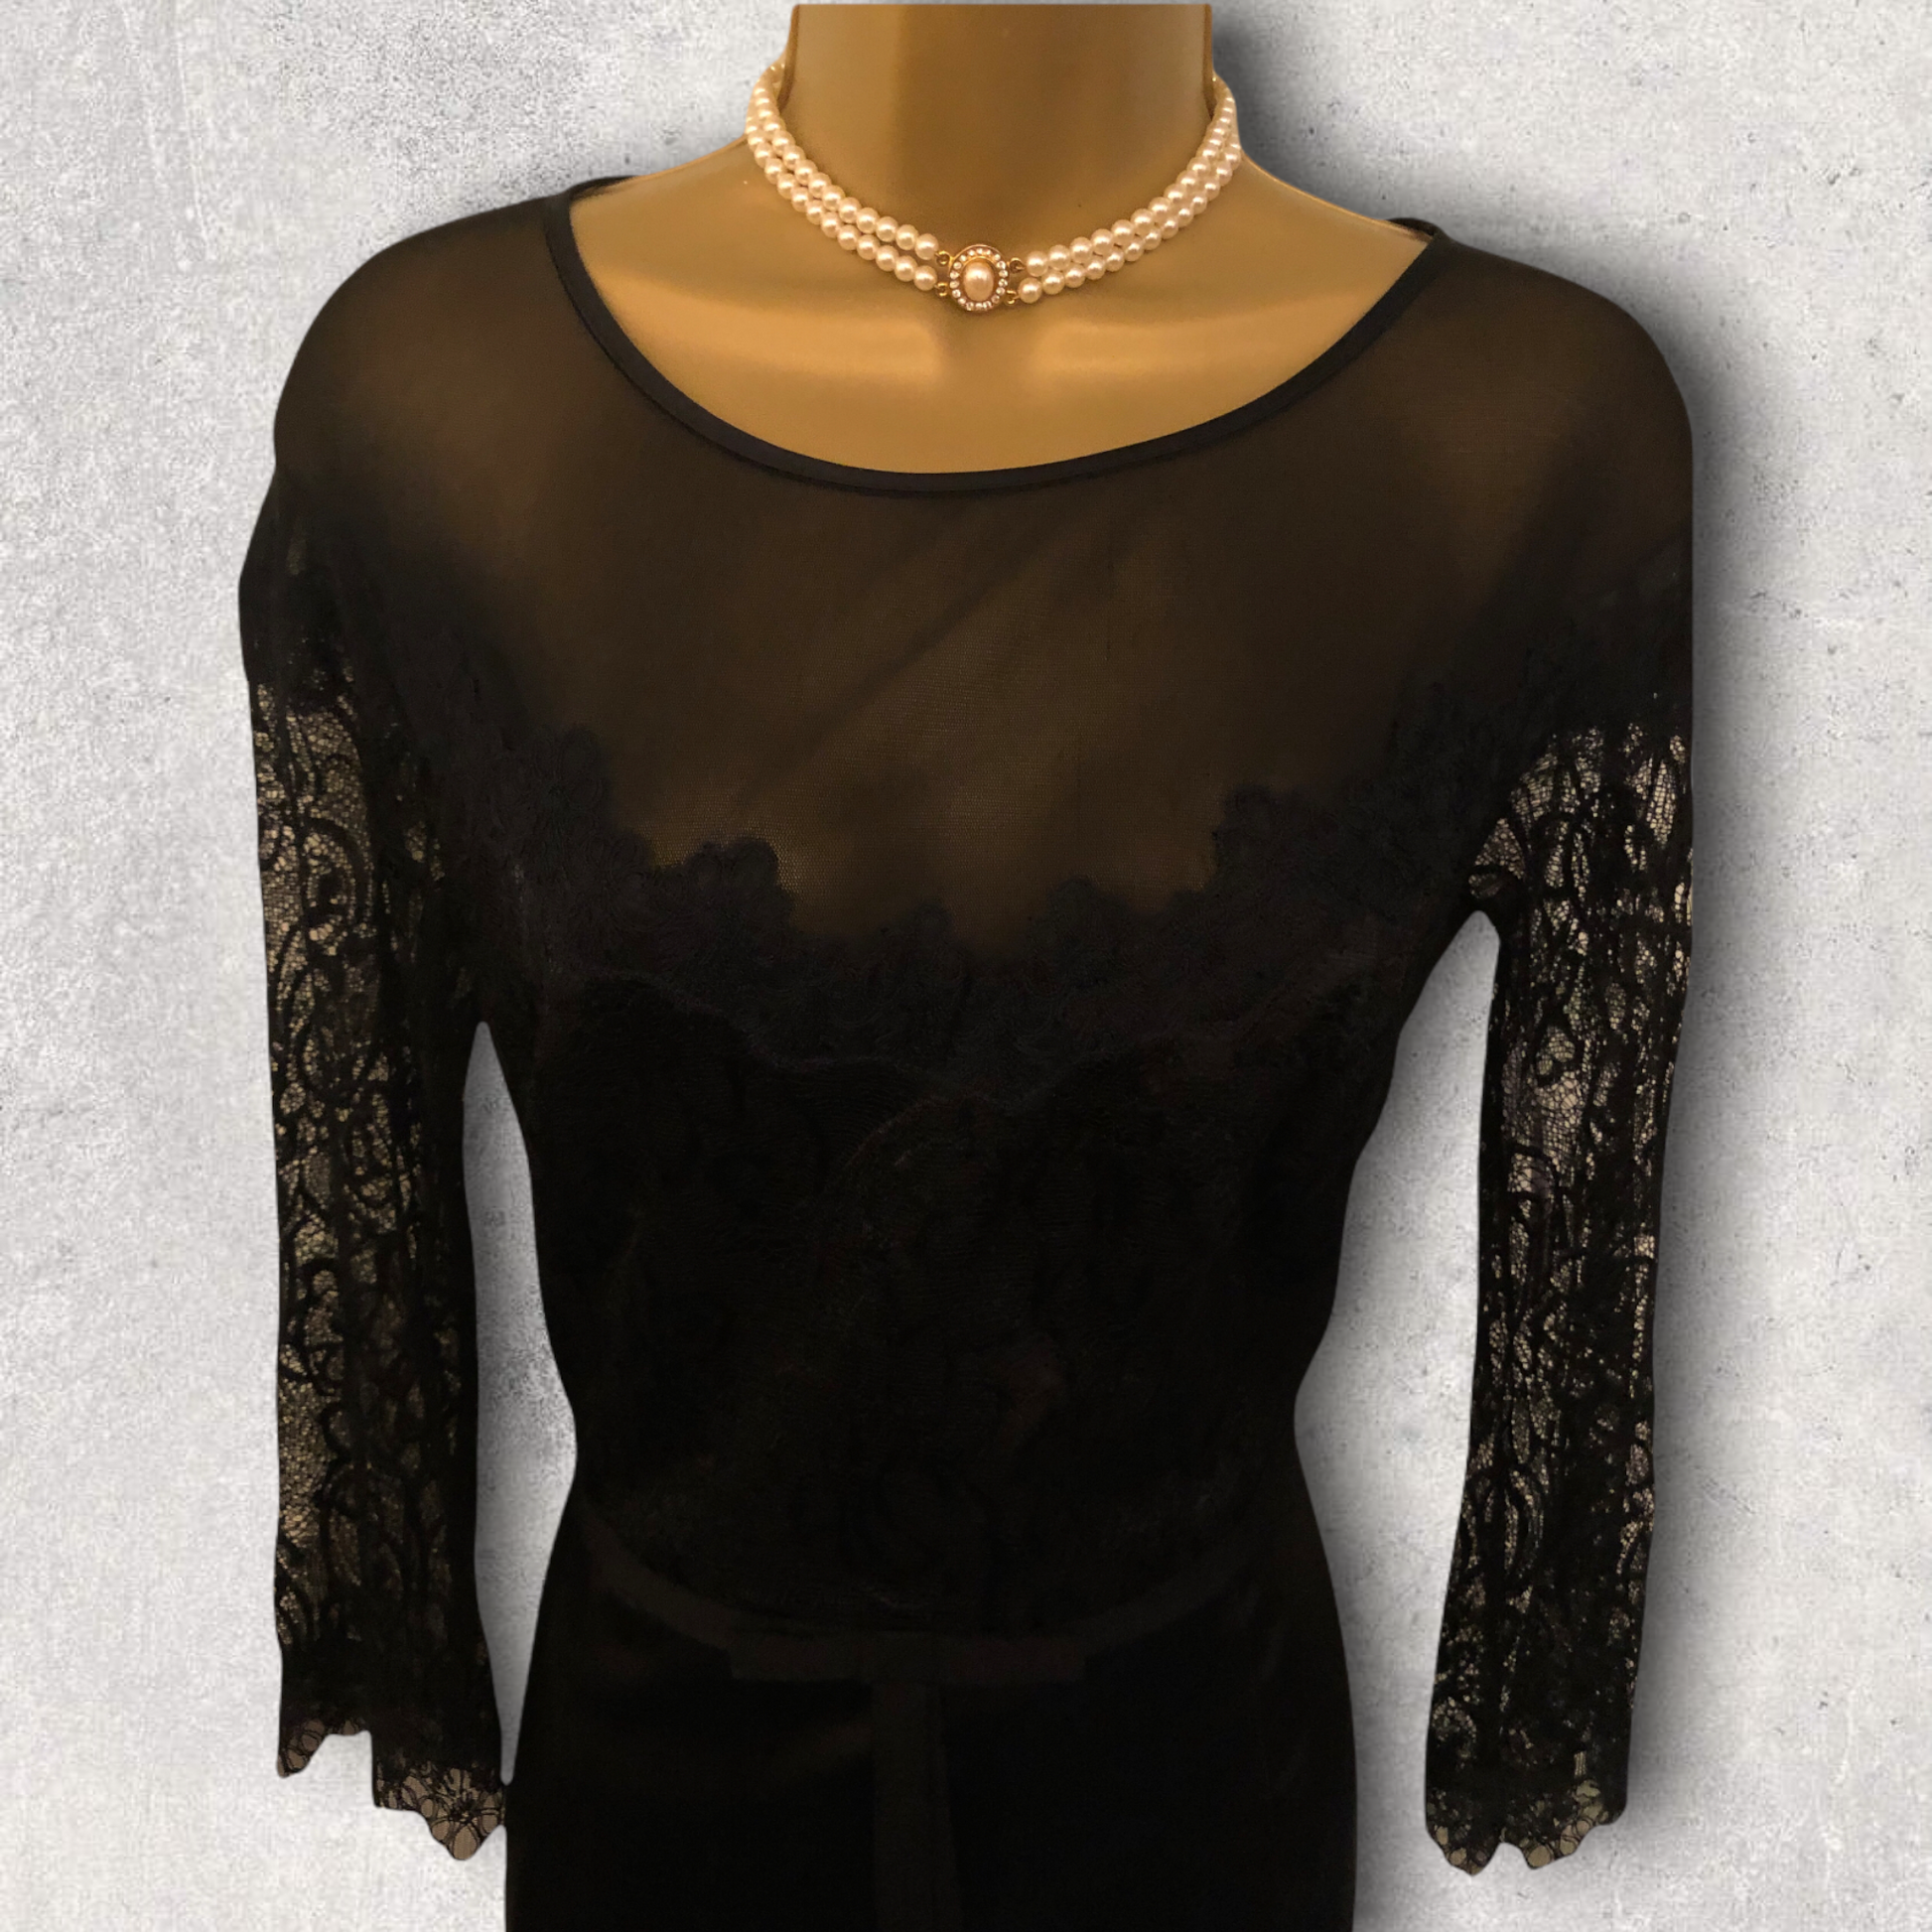 Luis Civit Black Long Sleeve Satin & Lace Dress UK 10 US 6 EU 38 BNWT RRP £395 Timeless Fashions